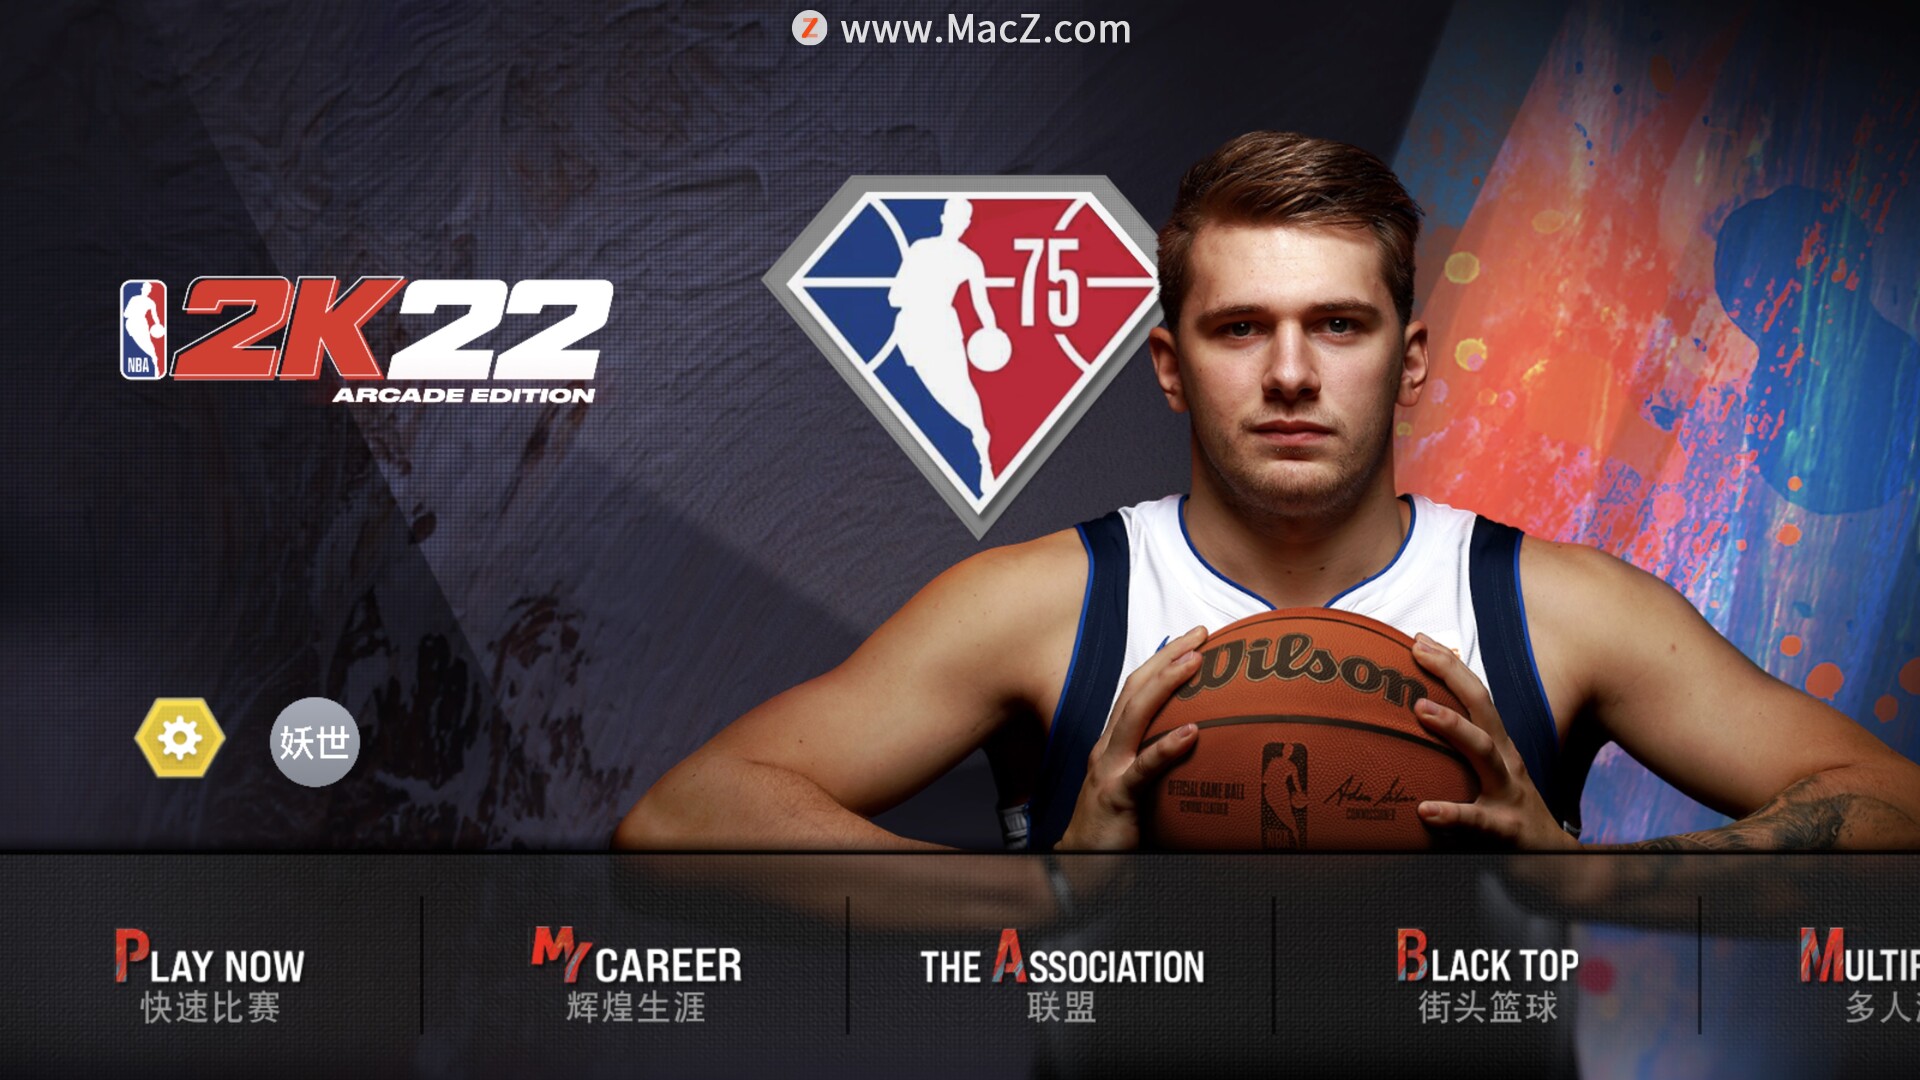 NBA 2K22破解版-NBA 2K22 Arcade Edition for Mac- Mac下载插图5